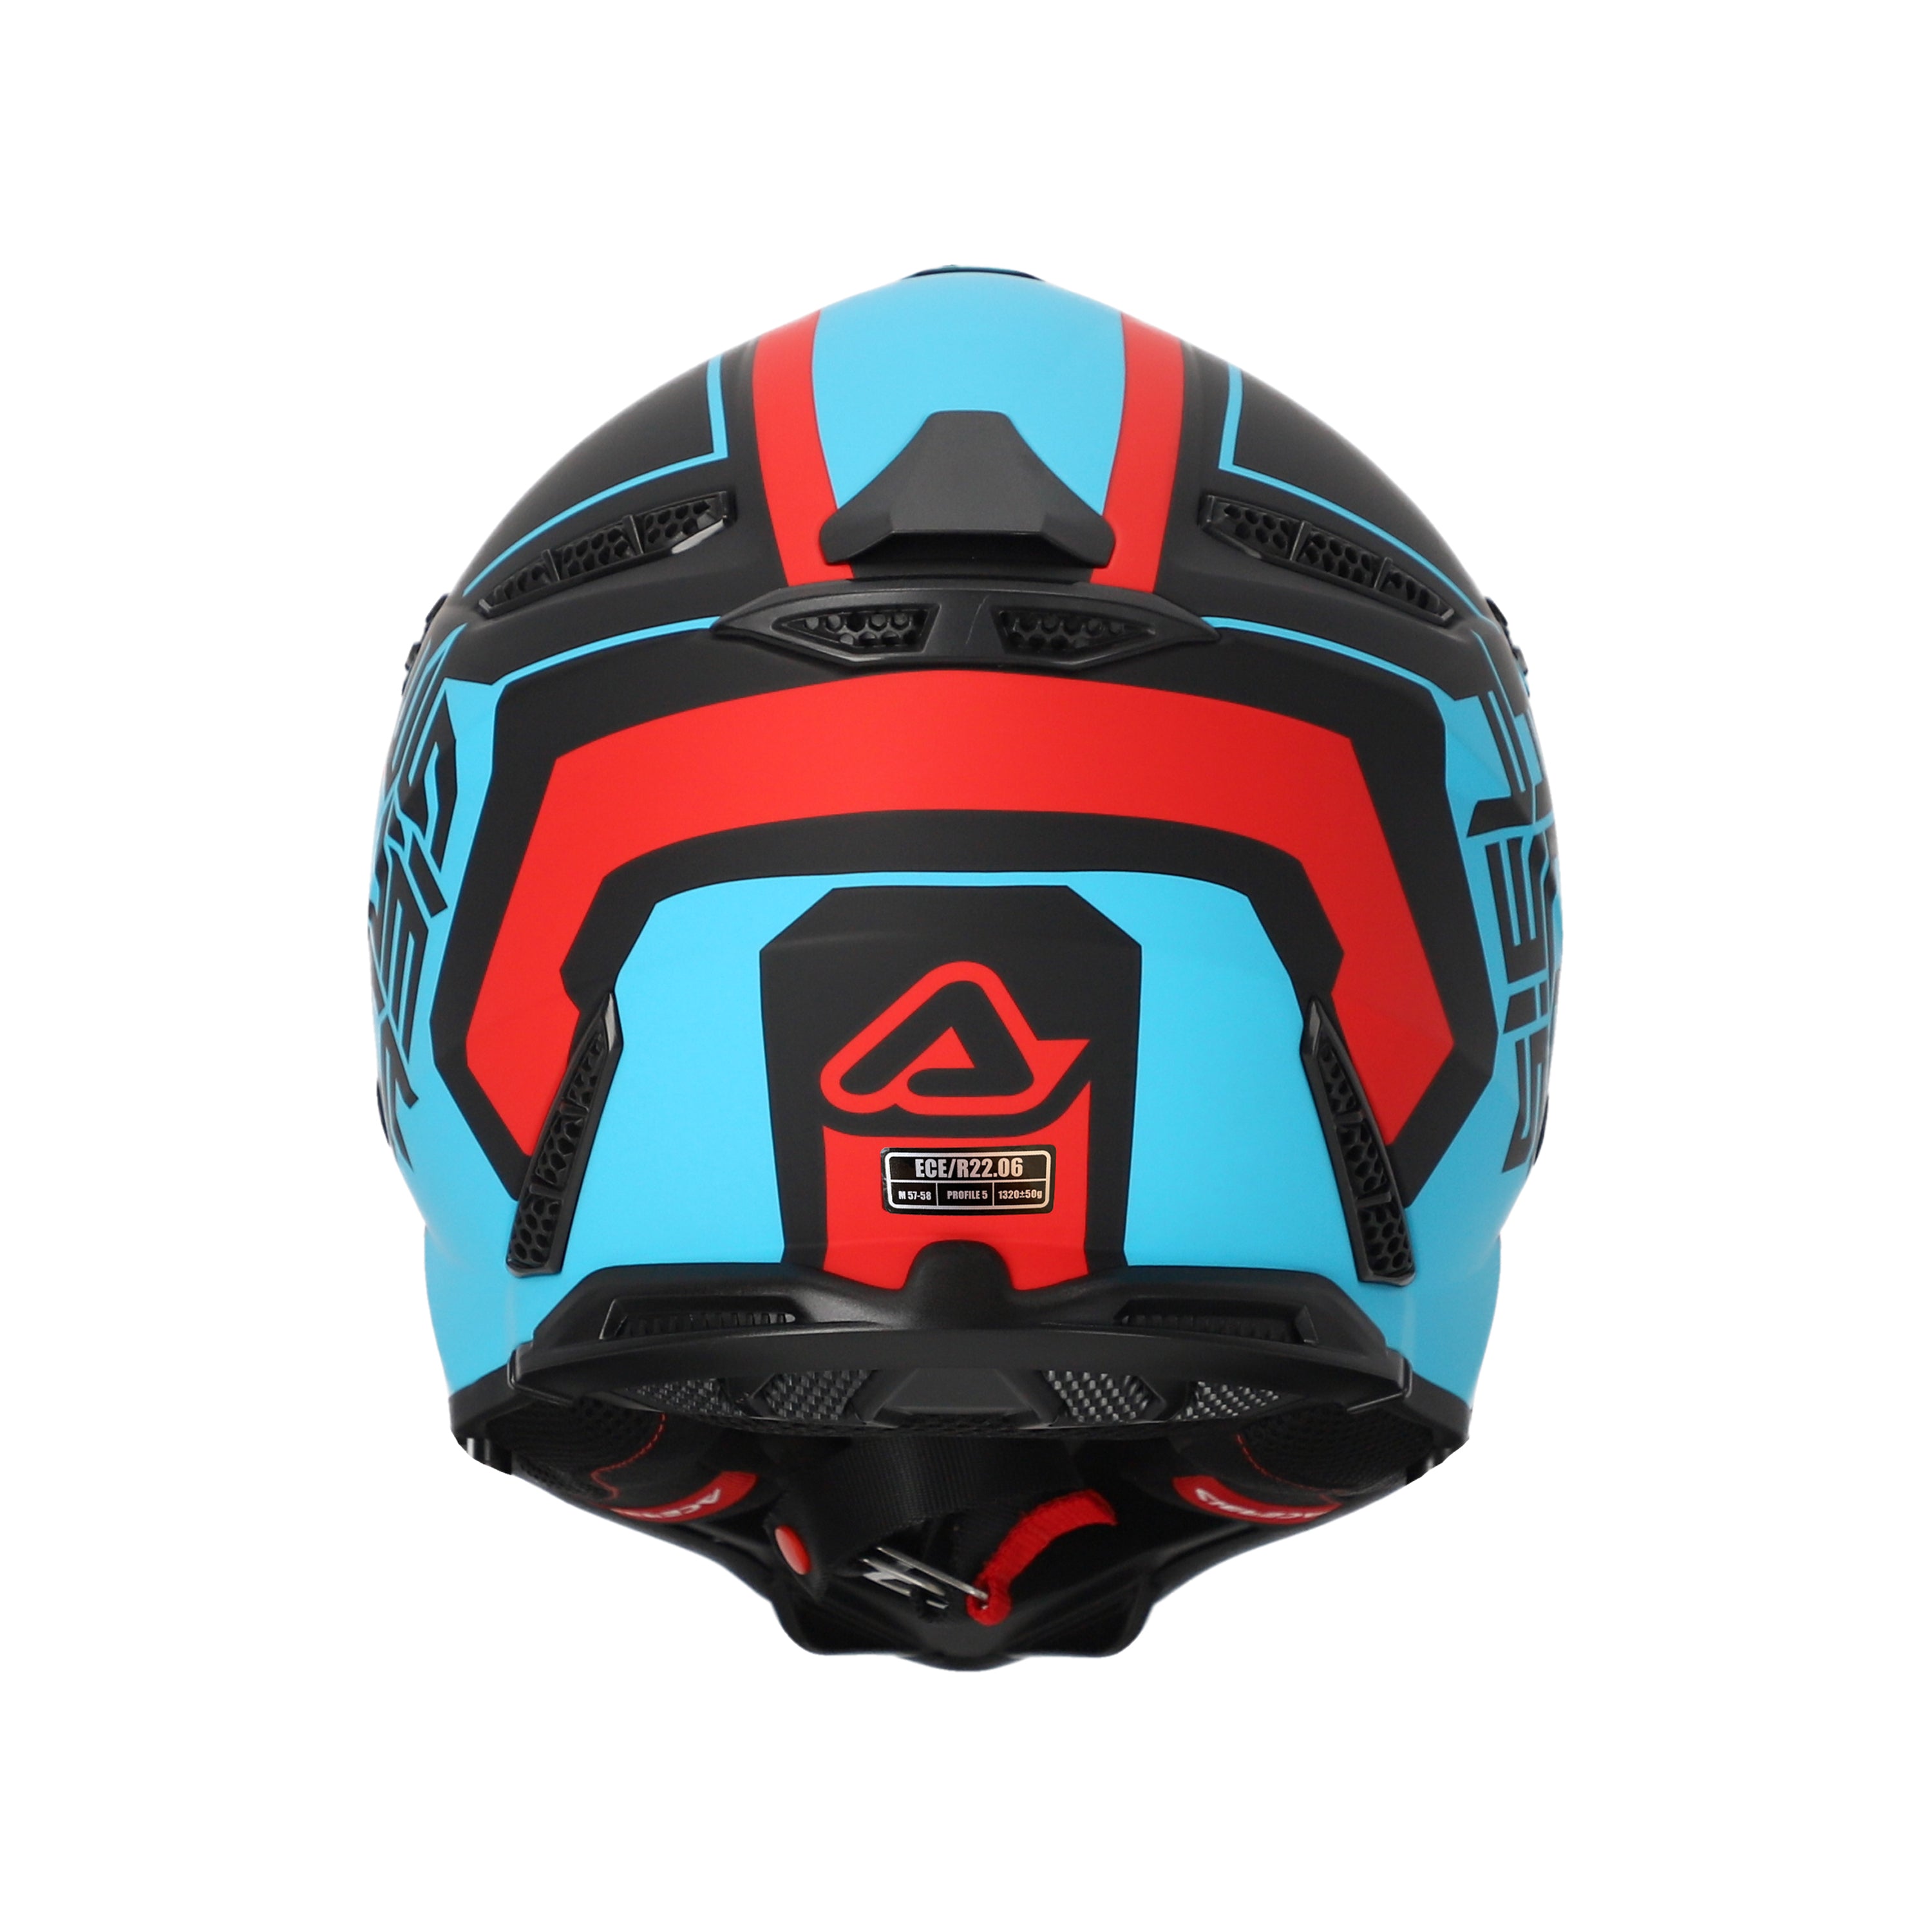 Acerbis Profile 5 MX Helmet Matte Red/Blue